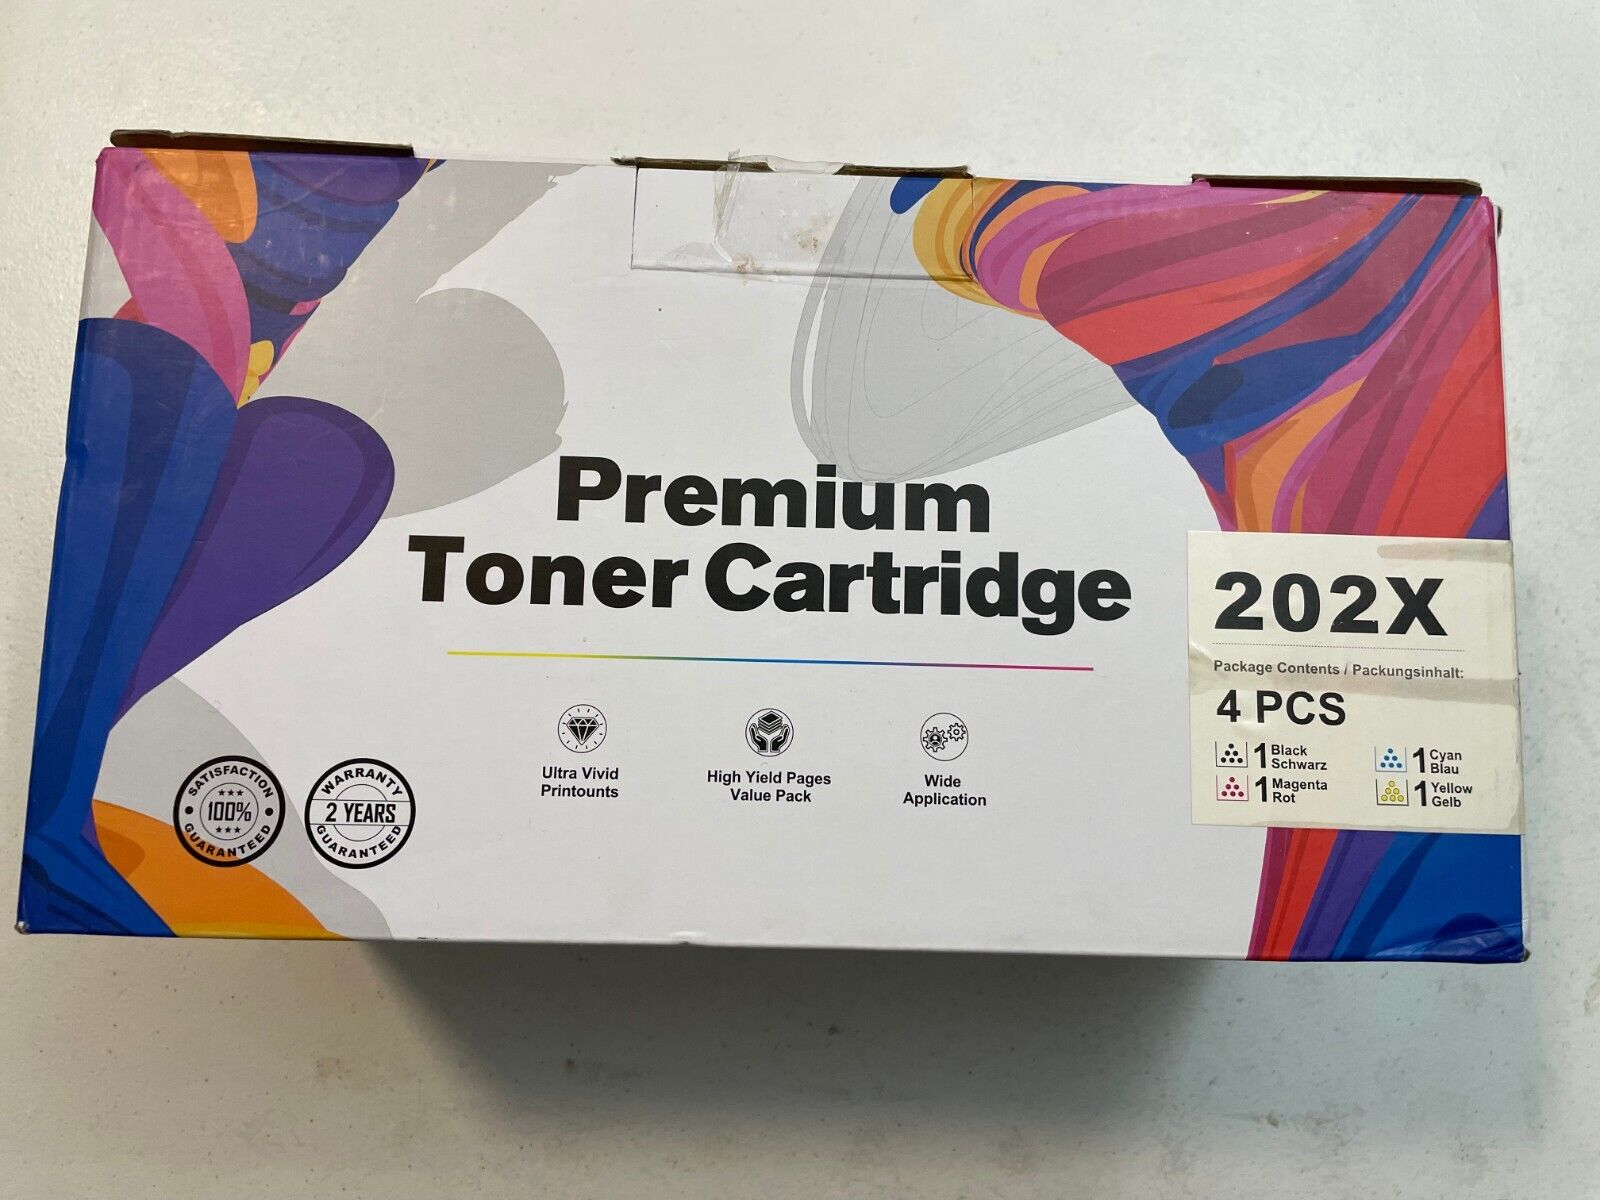 Premium Toner Cartridge 202X 4 pcs Black Cyan Magenta Yellow sealed New